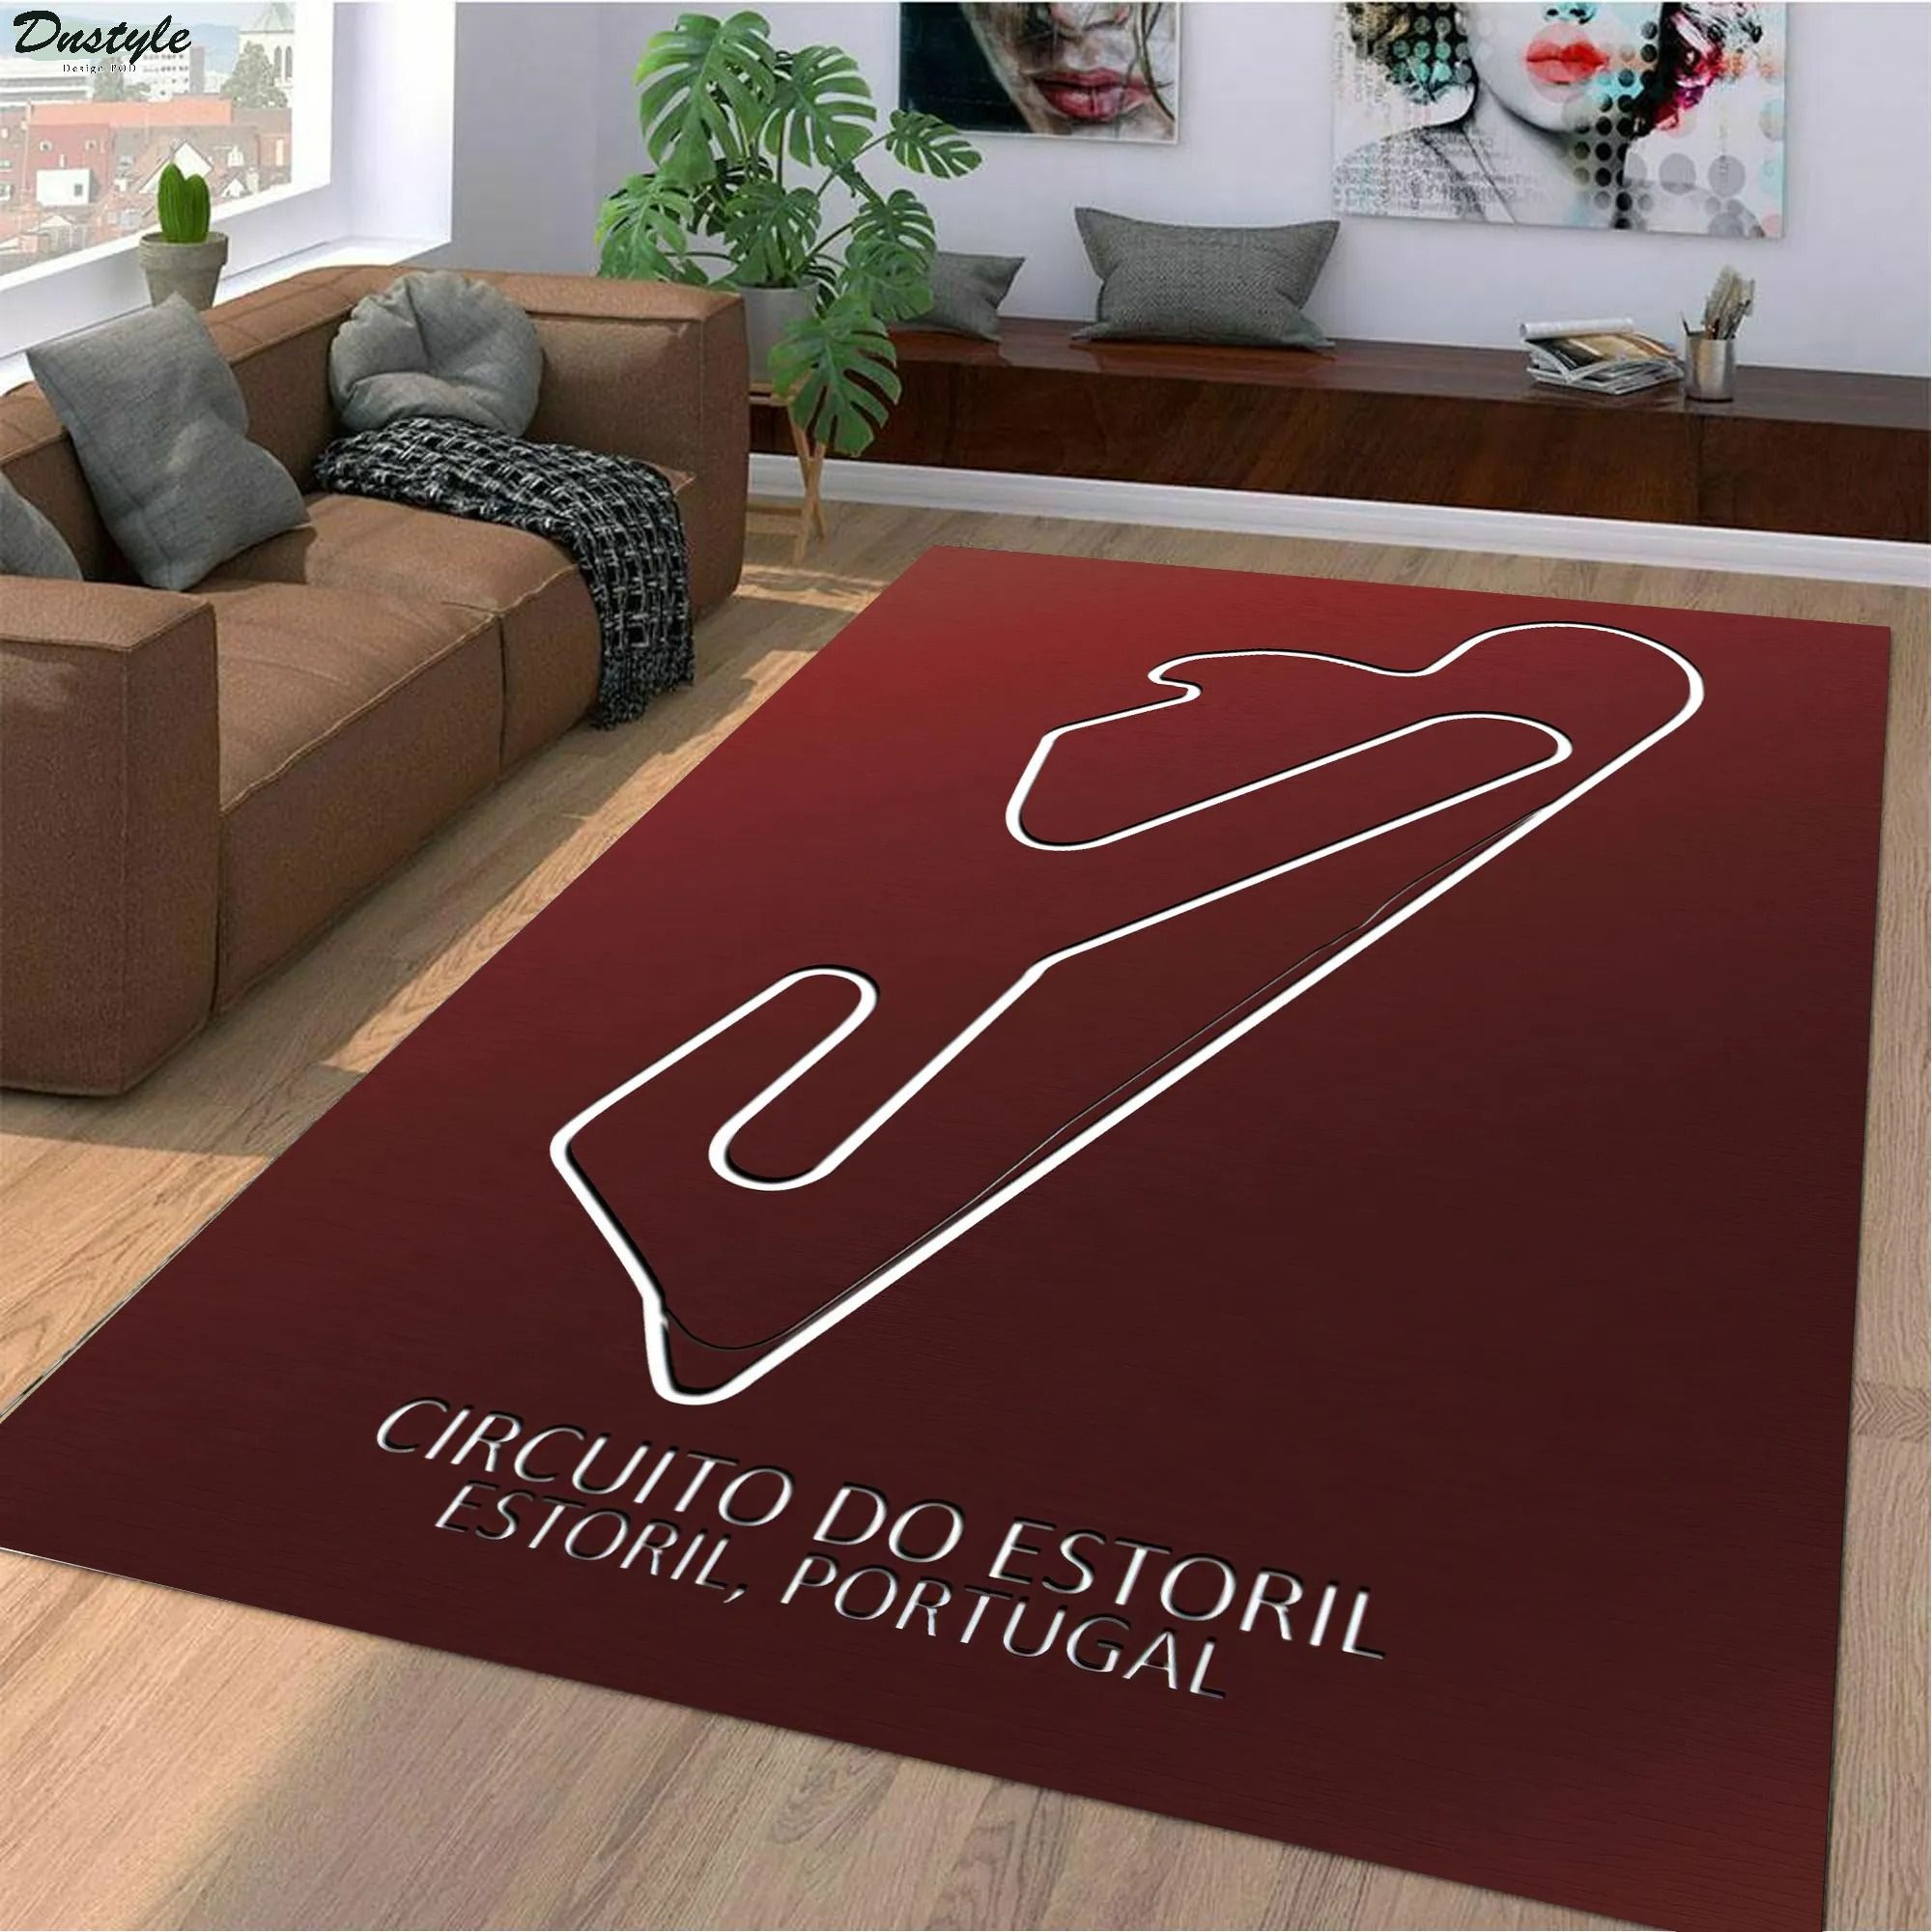 Circuito do Estoril F1 track rug